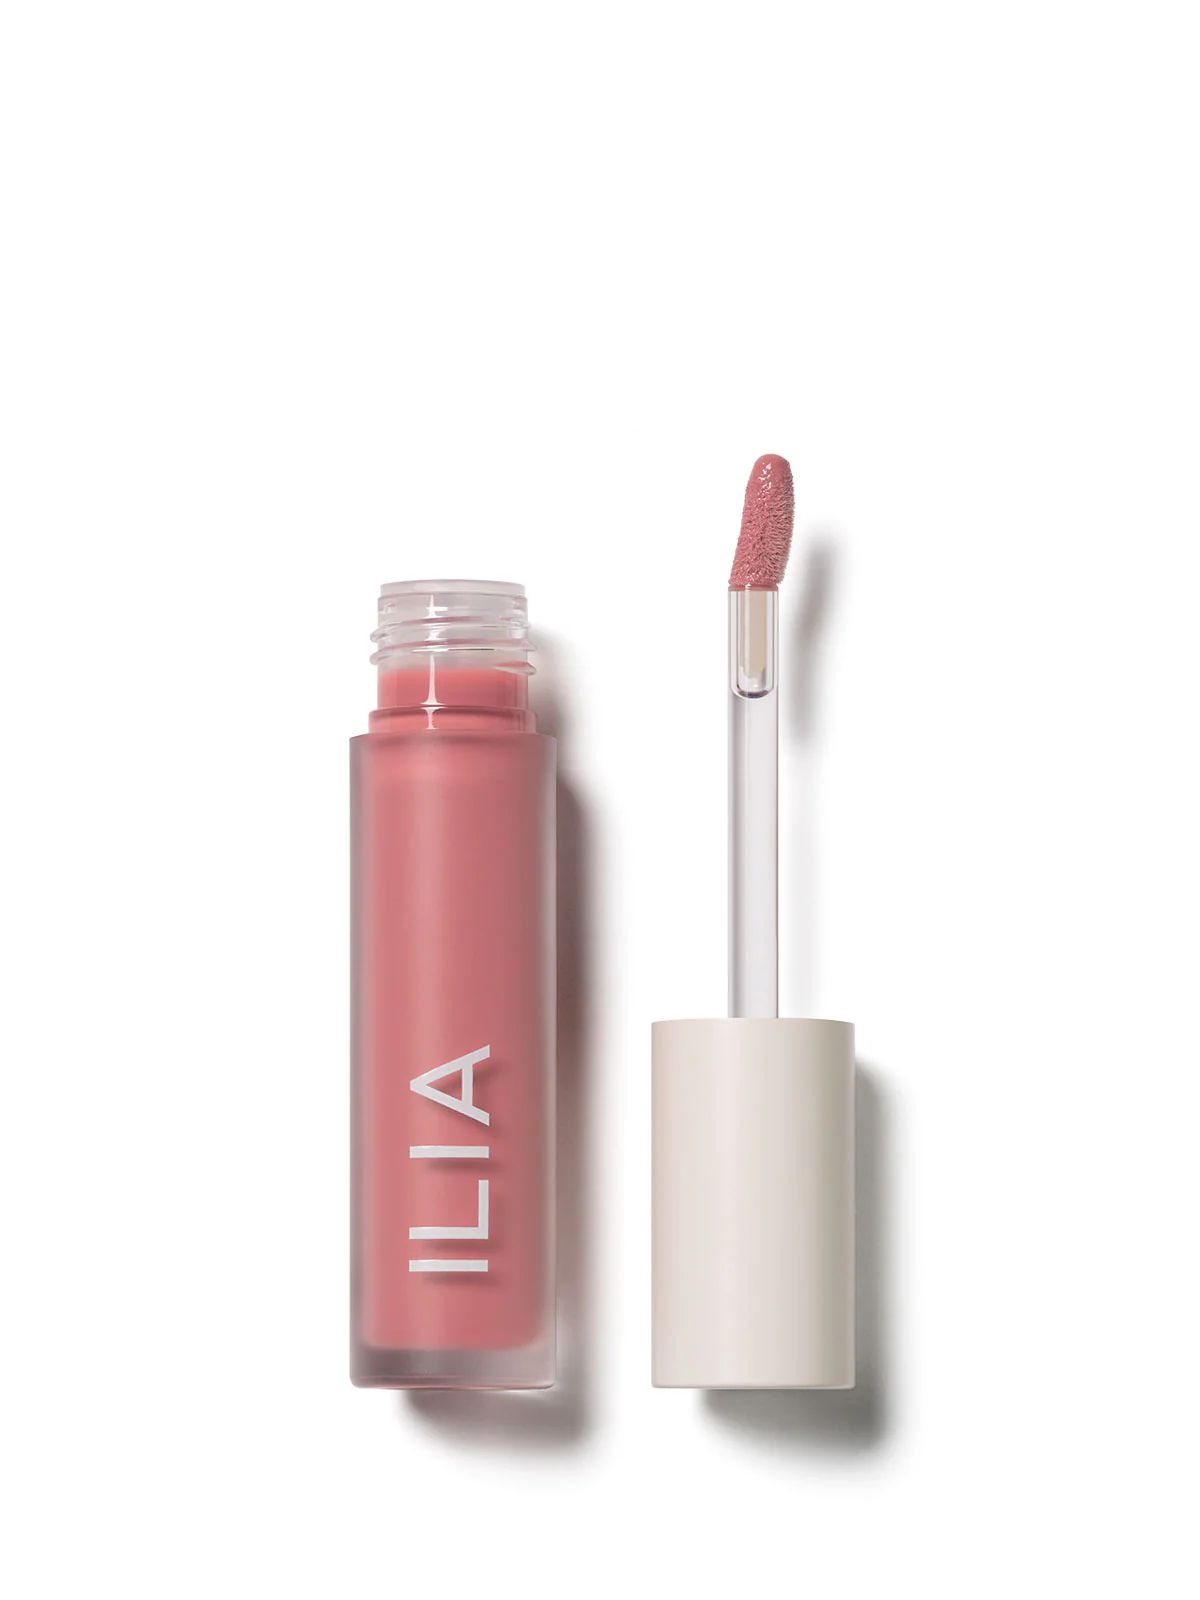 ILIA Balmy Gloss: Tropical Pink - Tinted Lip Oil | ILIA Beauty | ILIA Beauty